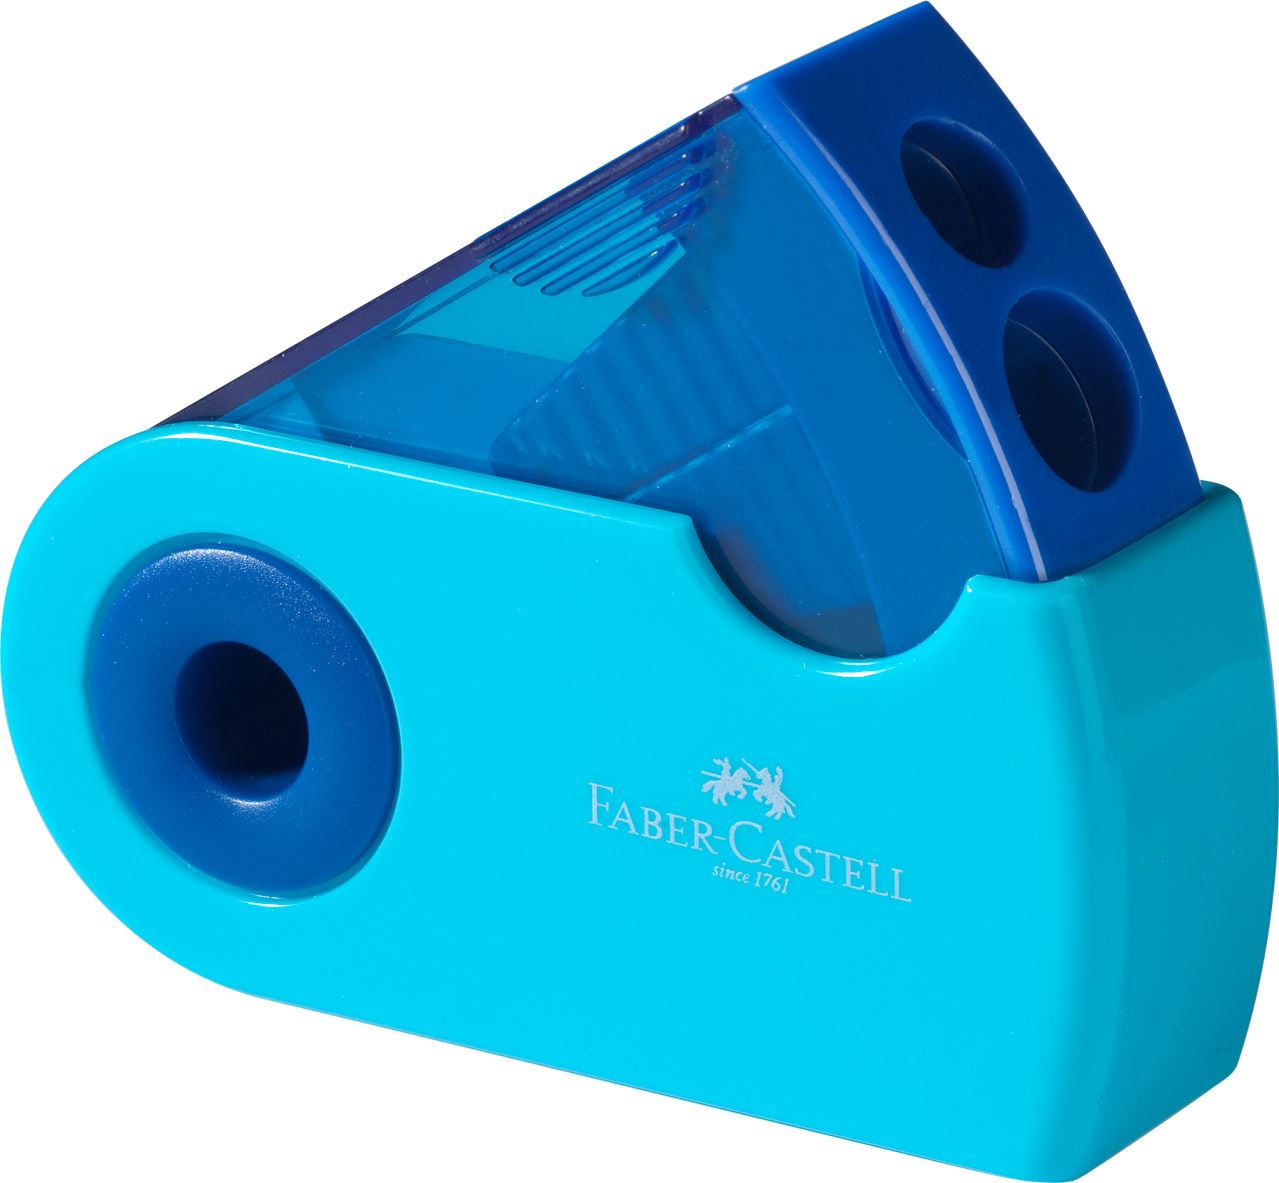 Faber-Castell - Pencil set Grip 2001 - Sleeve blue